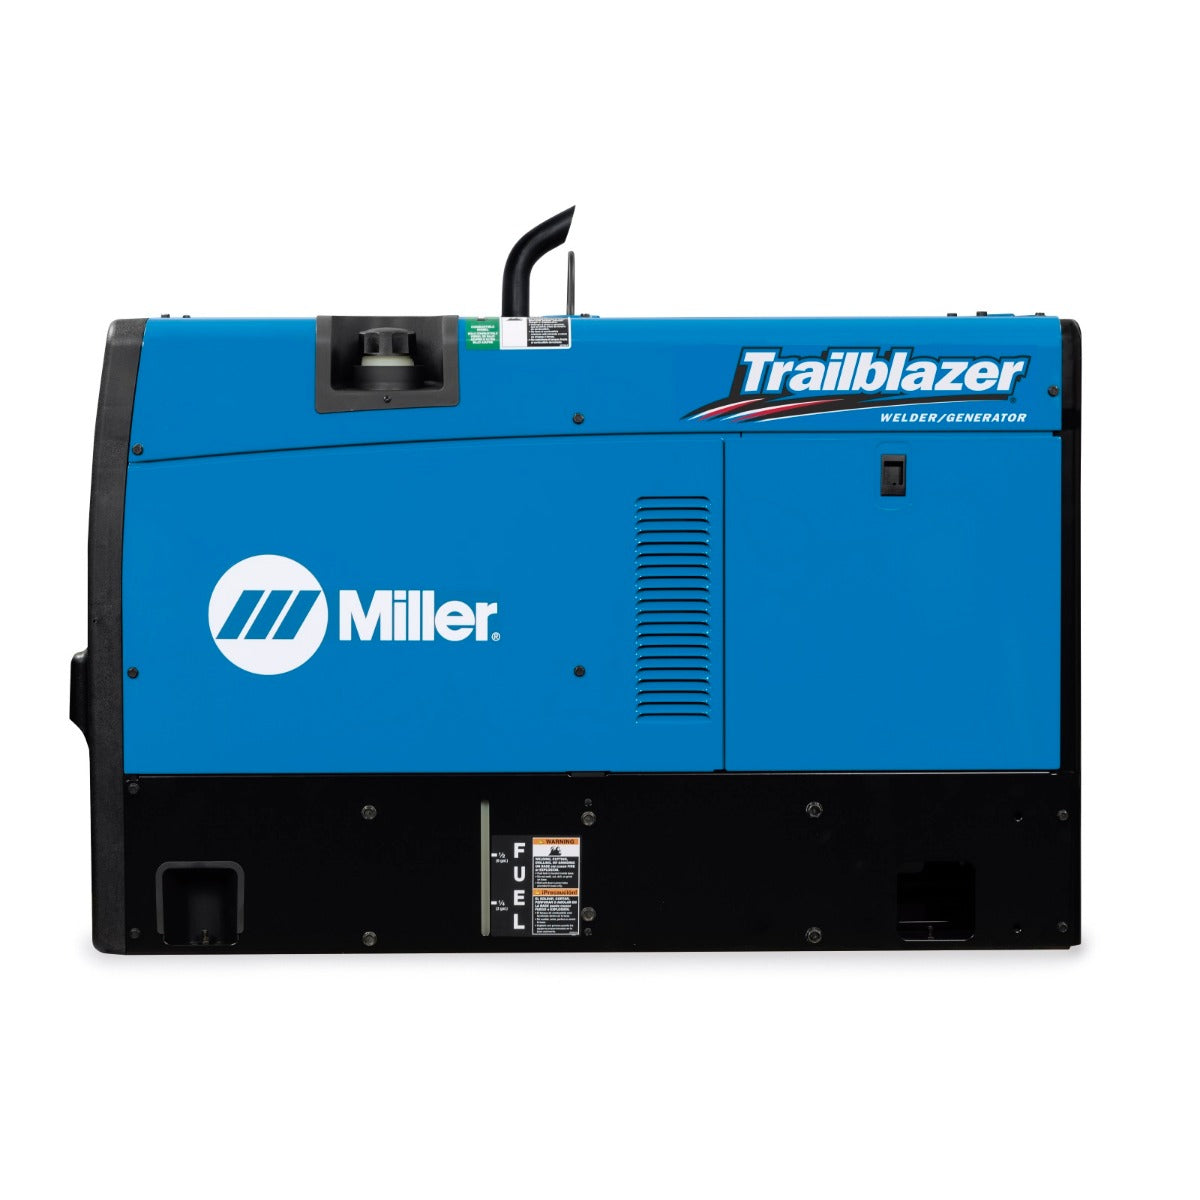 Miller Trailblazer 325 Diesel w/ArcReach, Excel Power, GFCI (907755003)